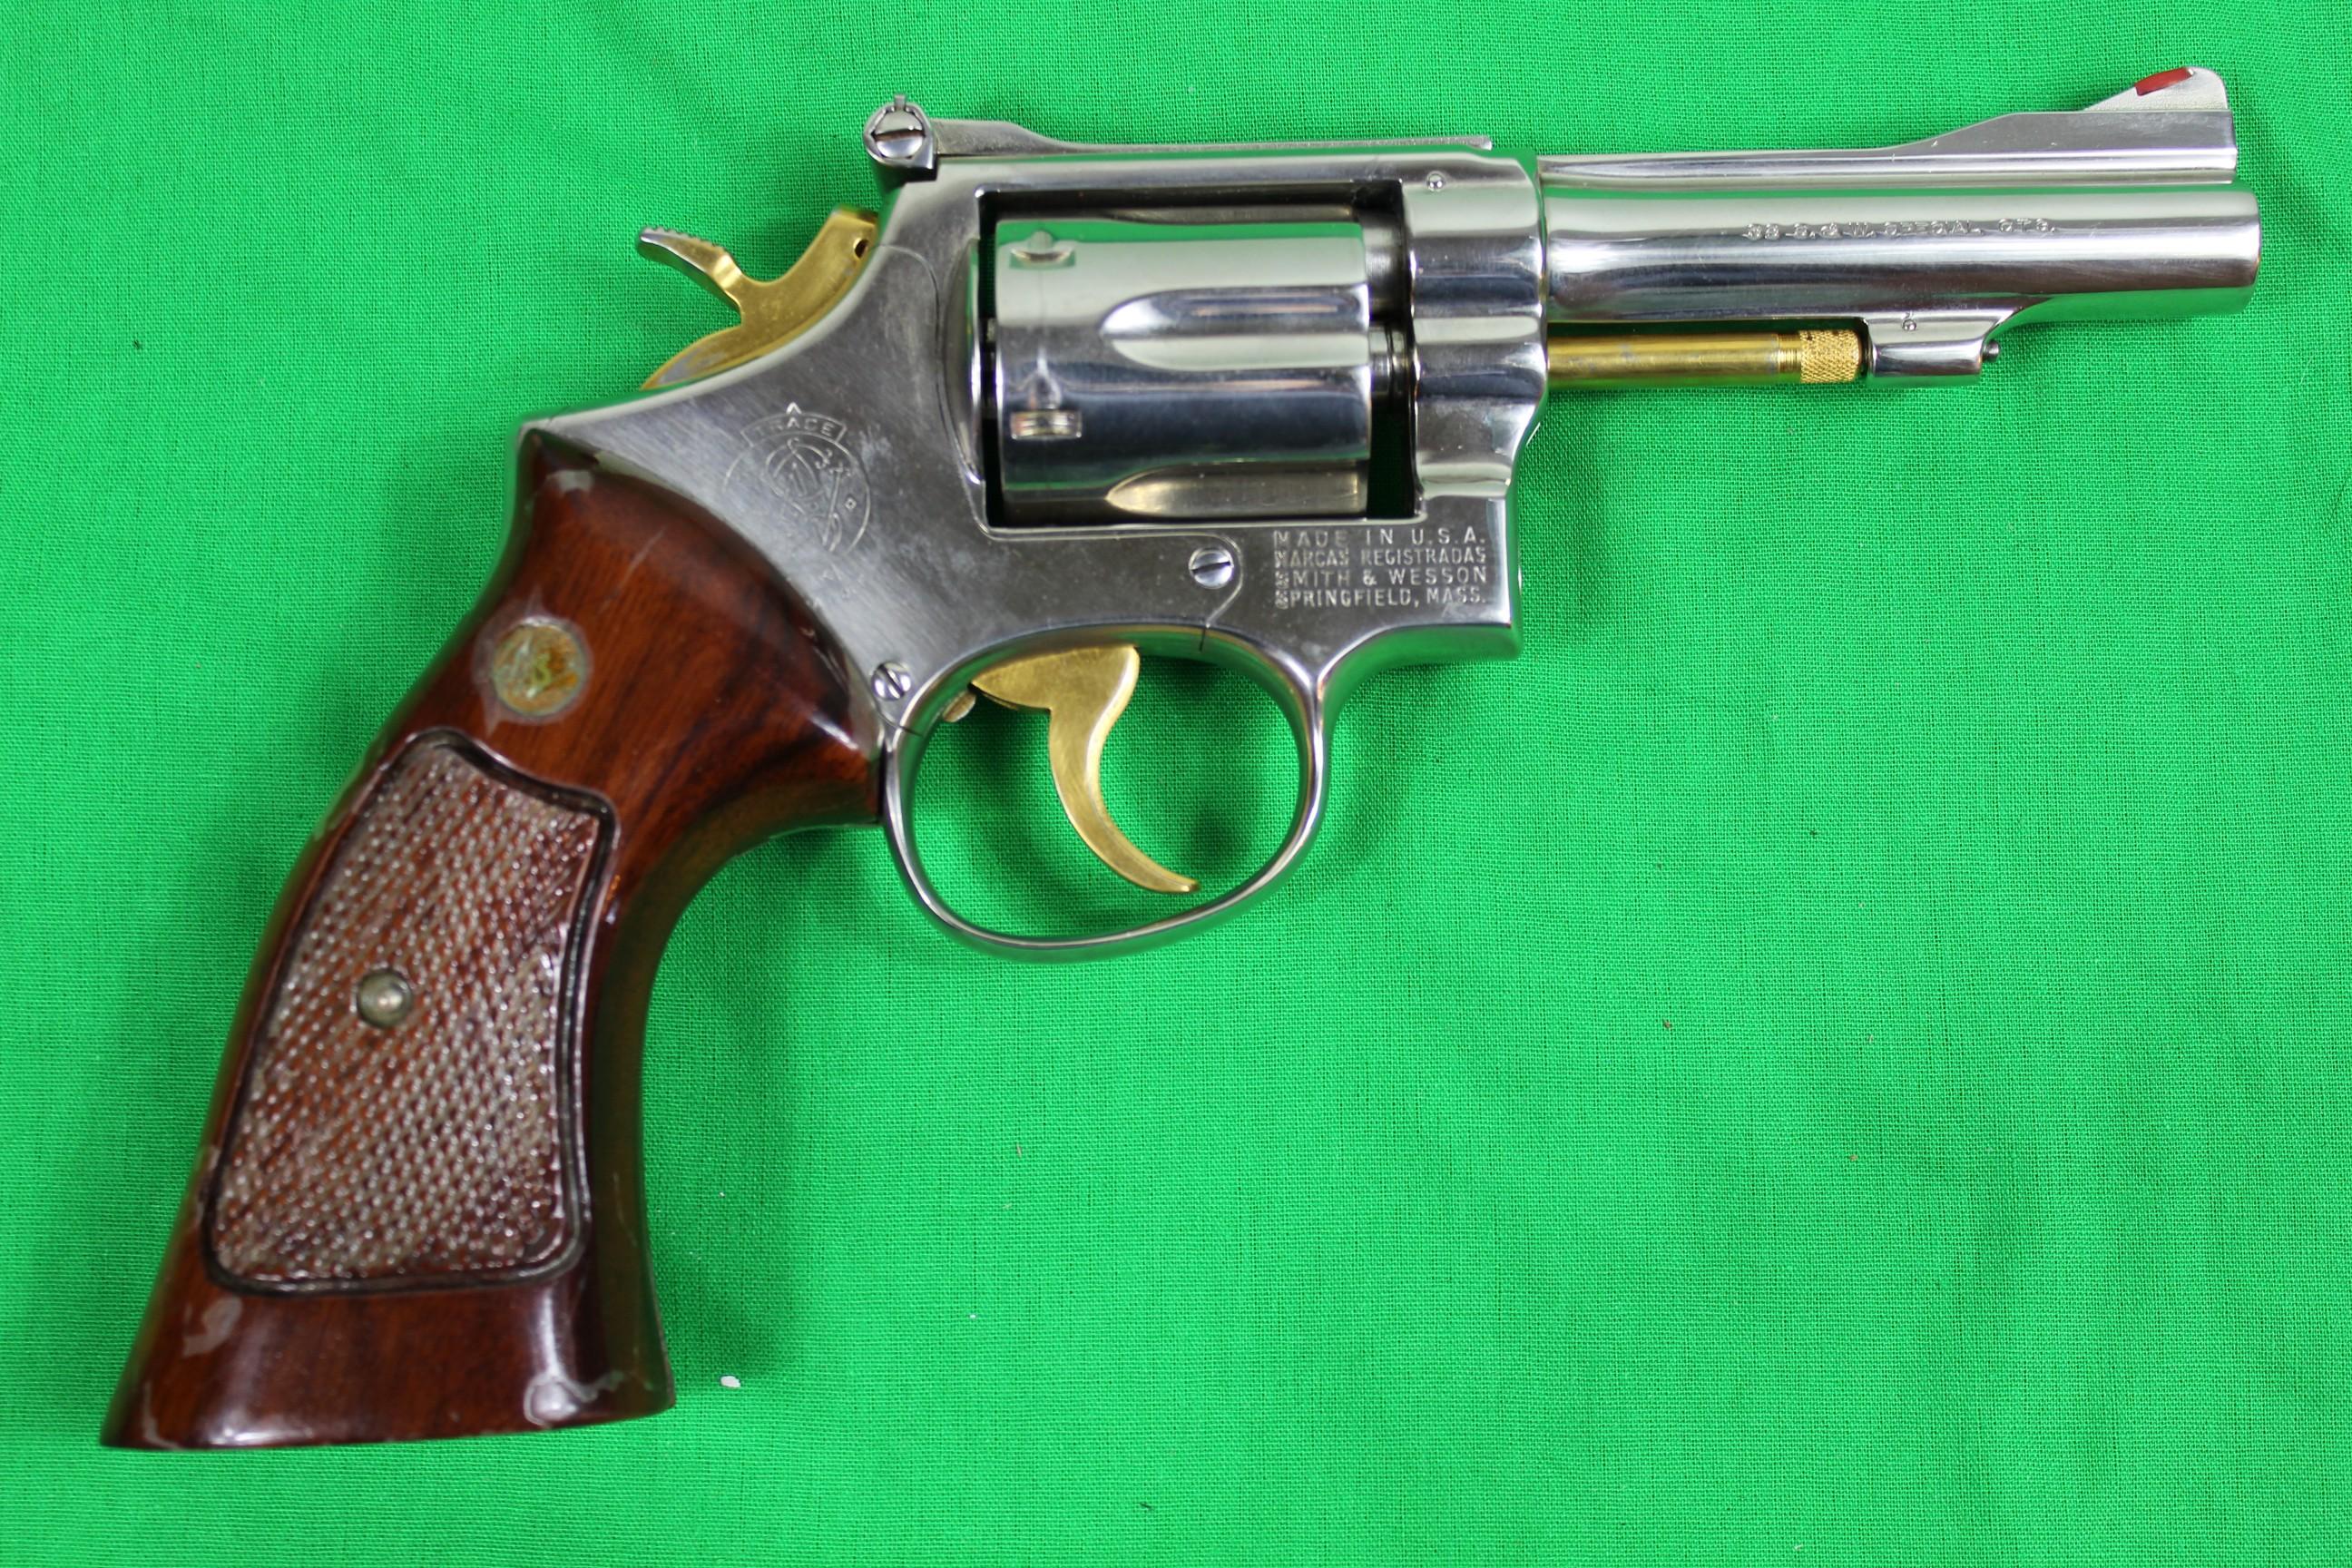 Smith & Wesson Model 15-2 revolver, caliber 38 Special, s/n K523736.  Refin